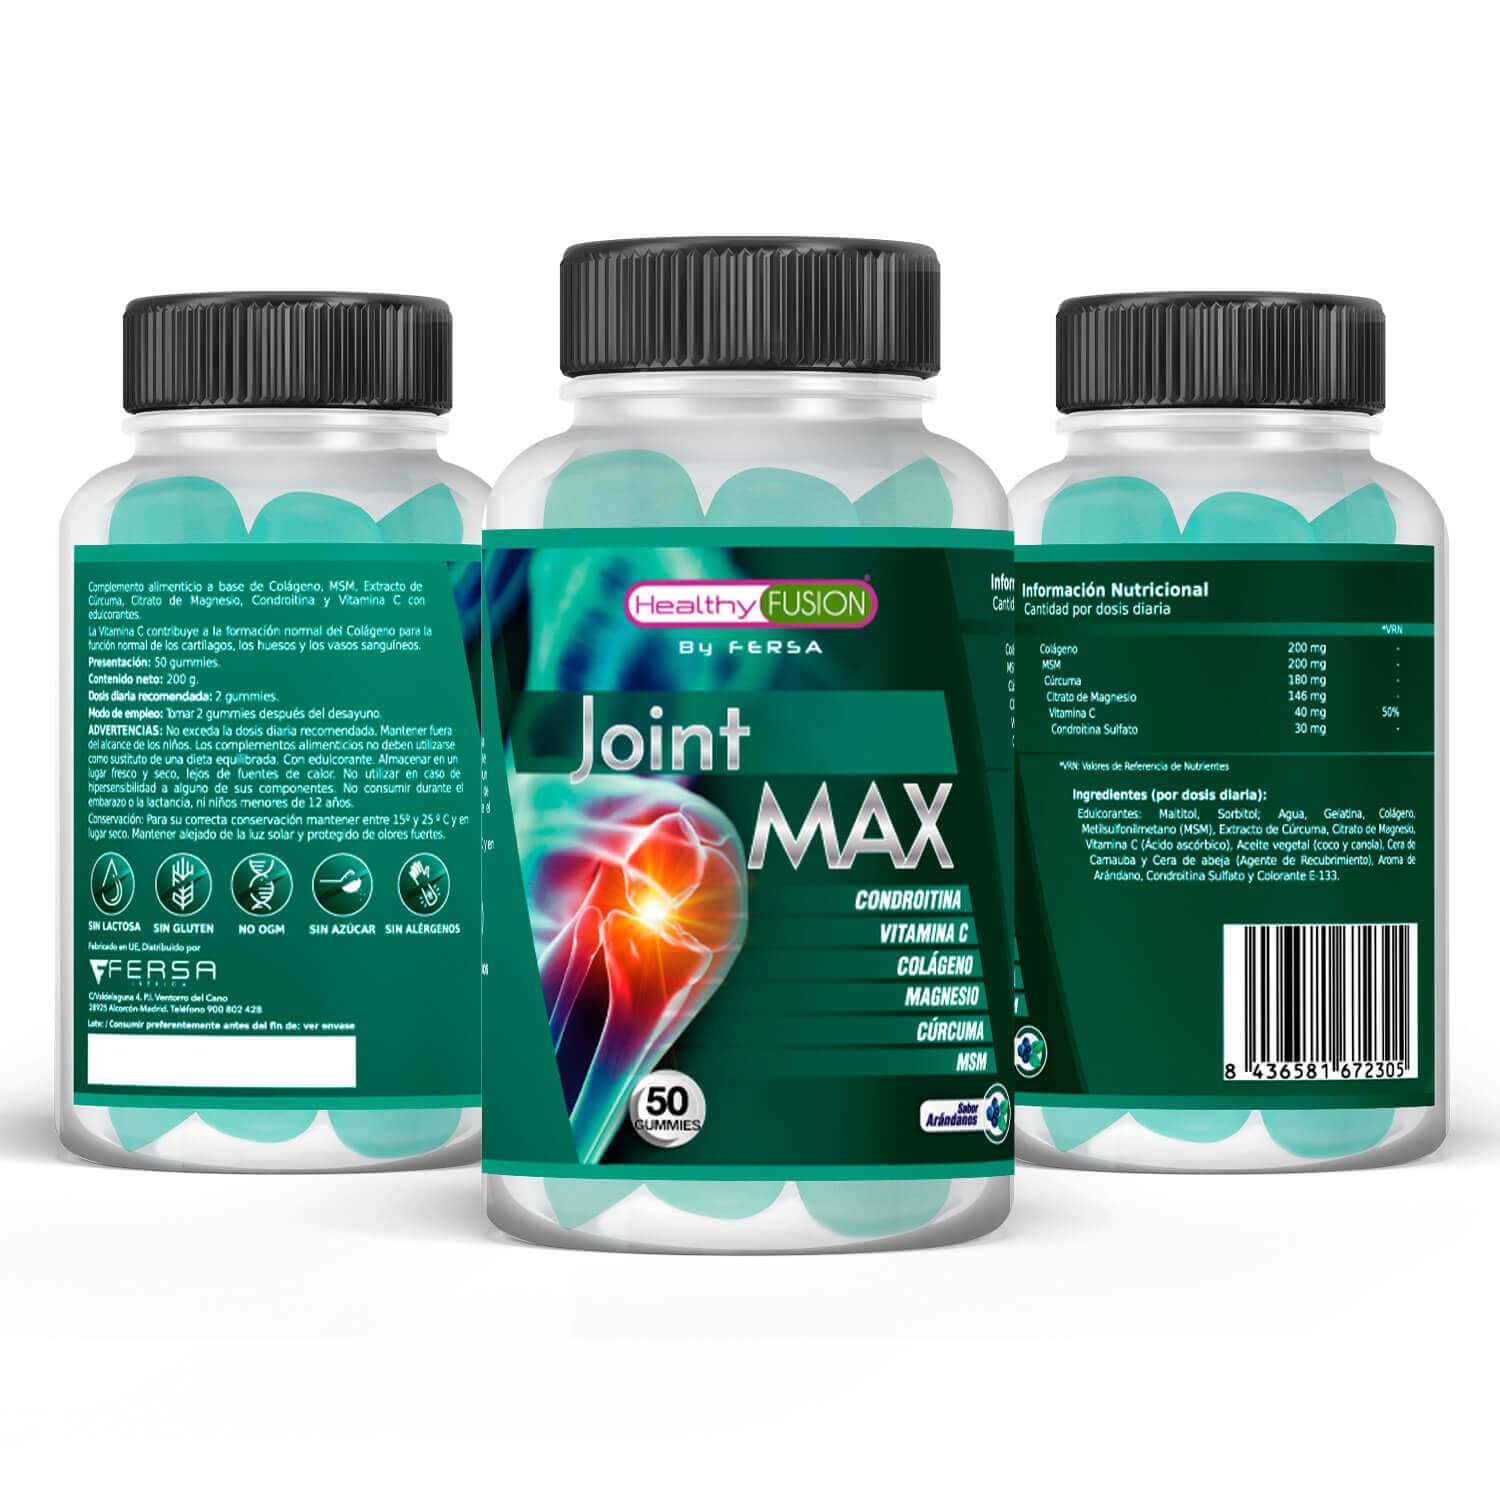 Healthy Fusion - Joint Max contenido